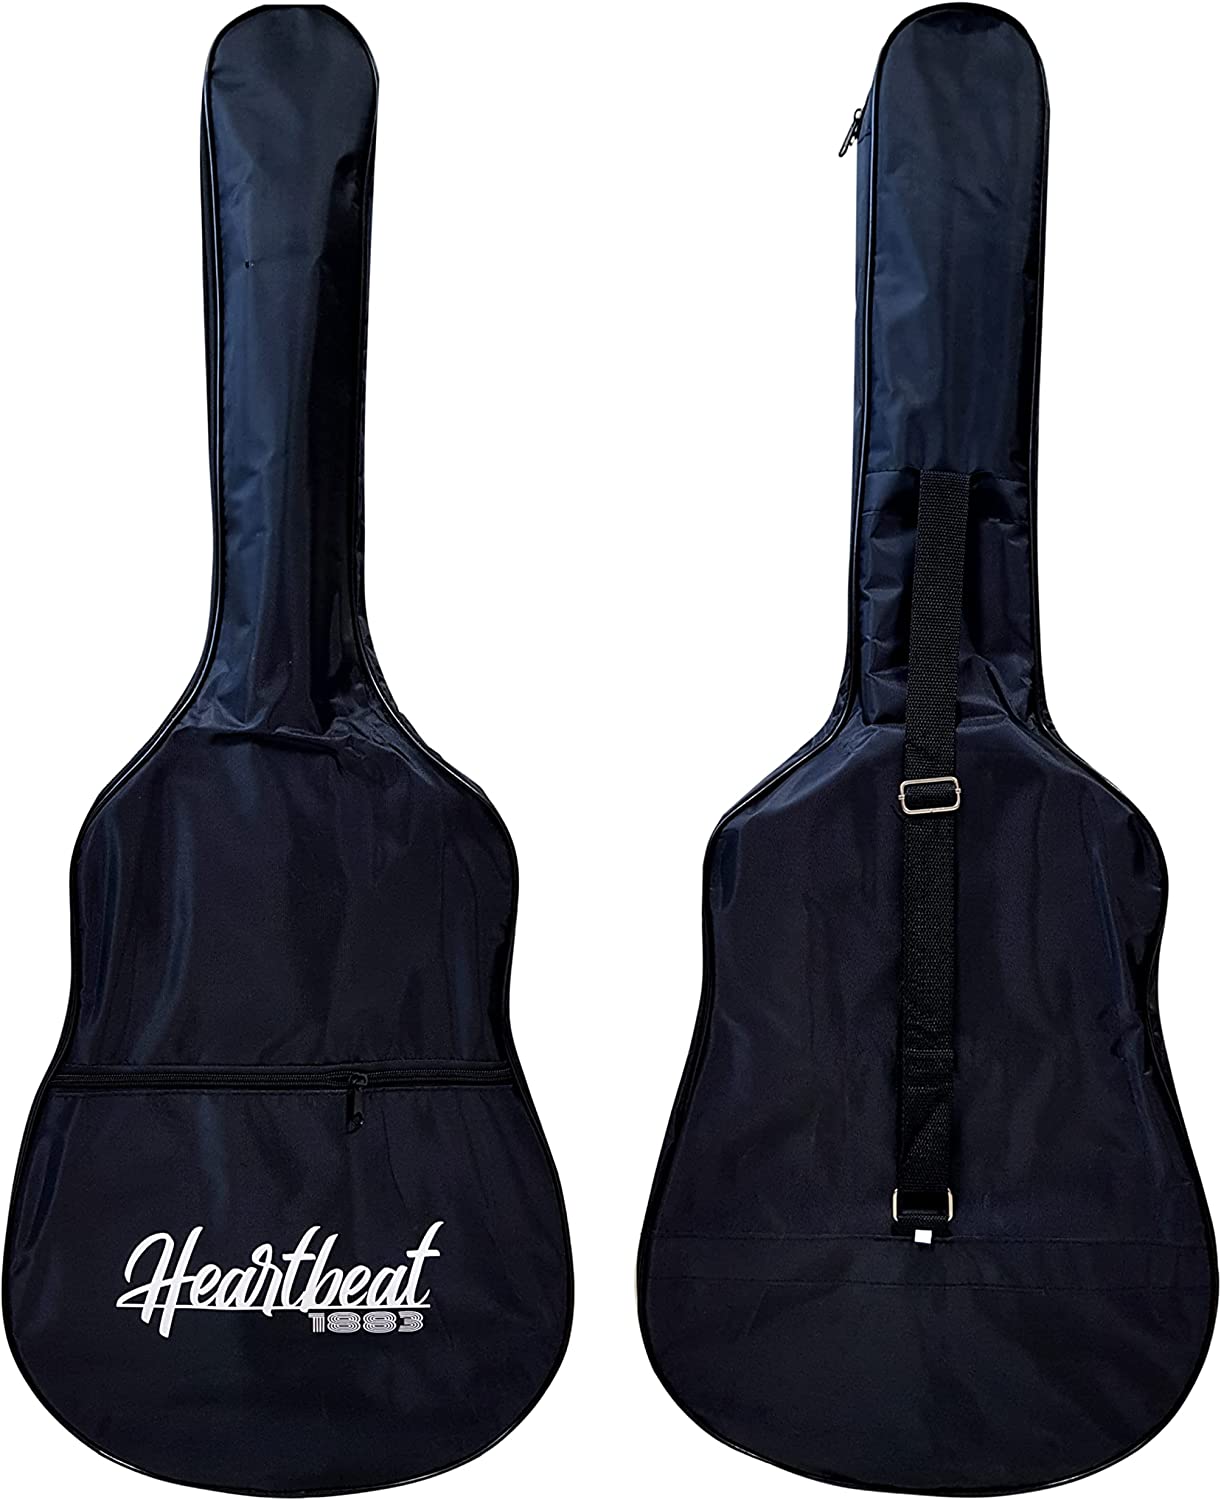 گیتار آکوستیک Heartbeat1883 Acoustic Guitar 38 With Bag - ارسال ۱۰ الی ۱۵ روز کاری